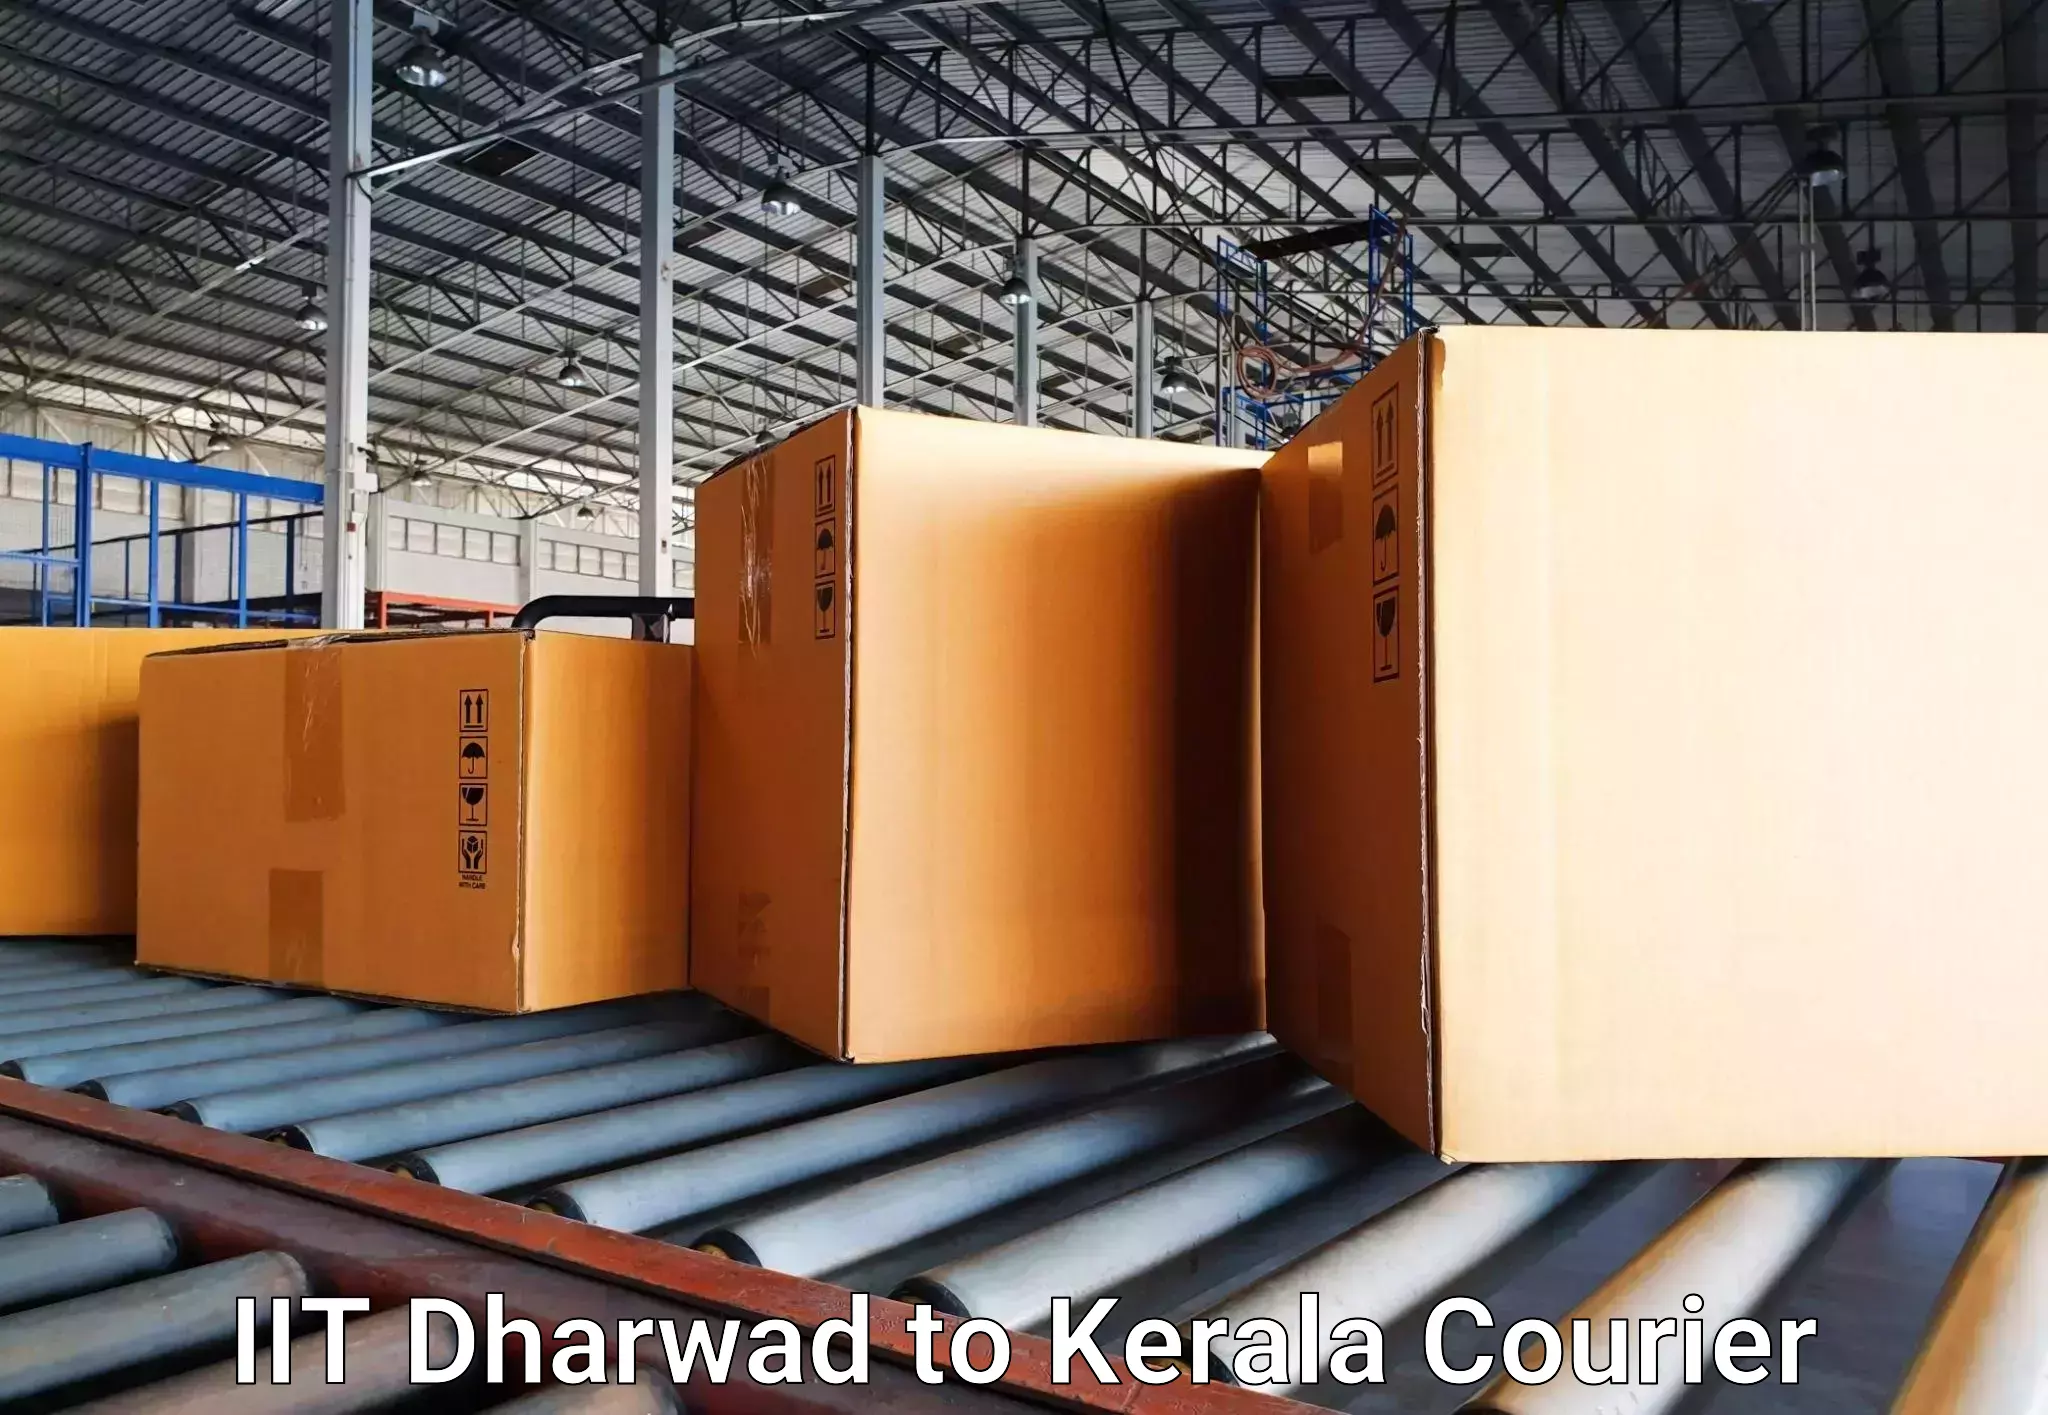 Luggage transport company IIT Dharwad to Parippally